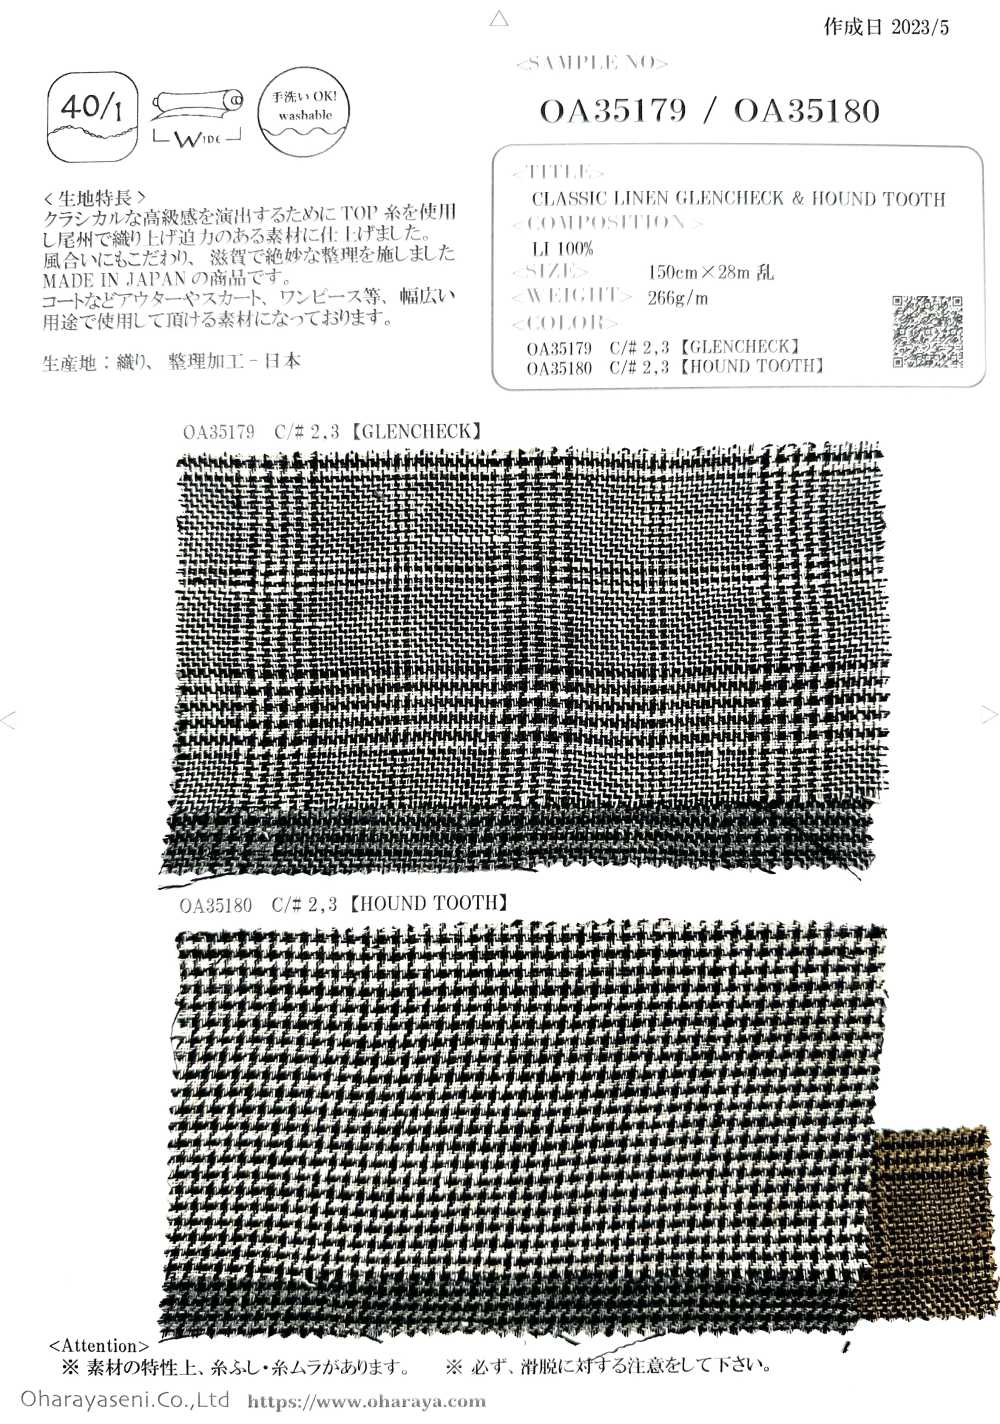 OA35180 LIN CLASSIQUE GLENCHECK & DENT DE CHIEN[Fabrication De Textile] Oharayaseni